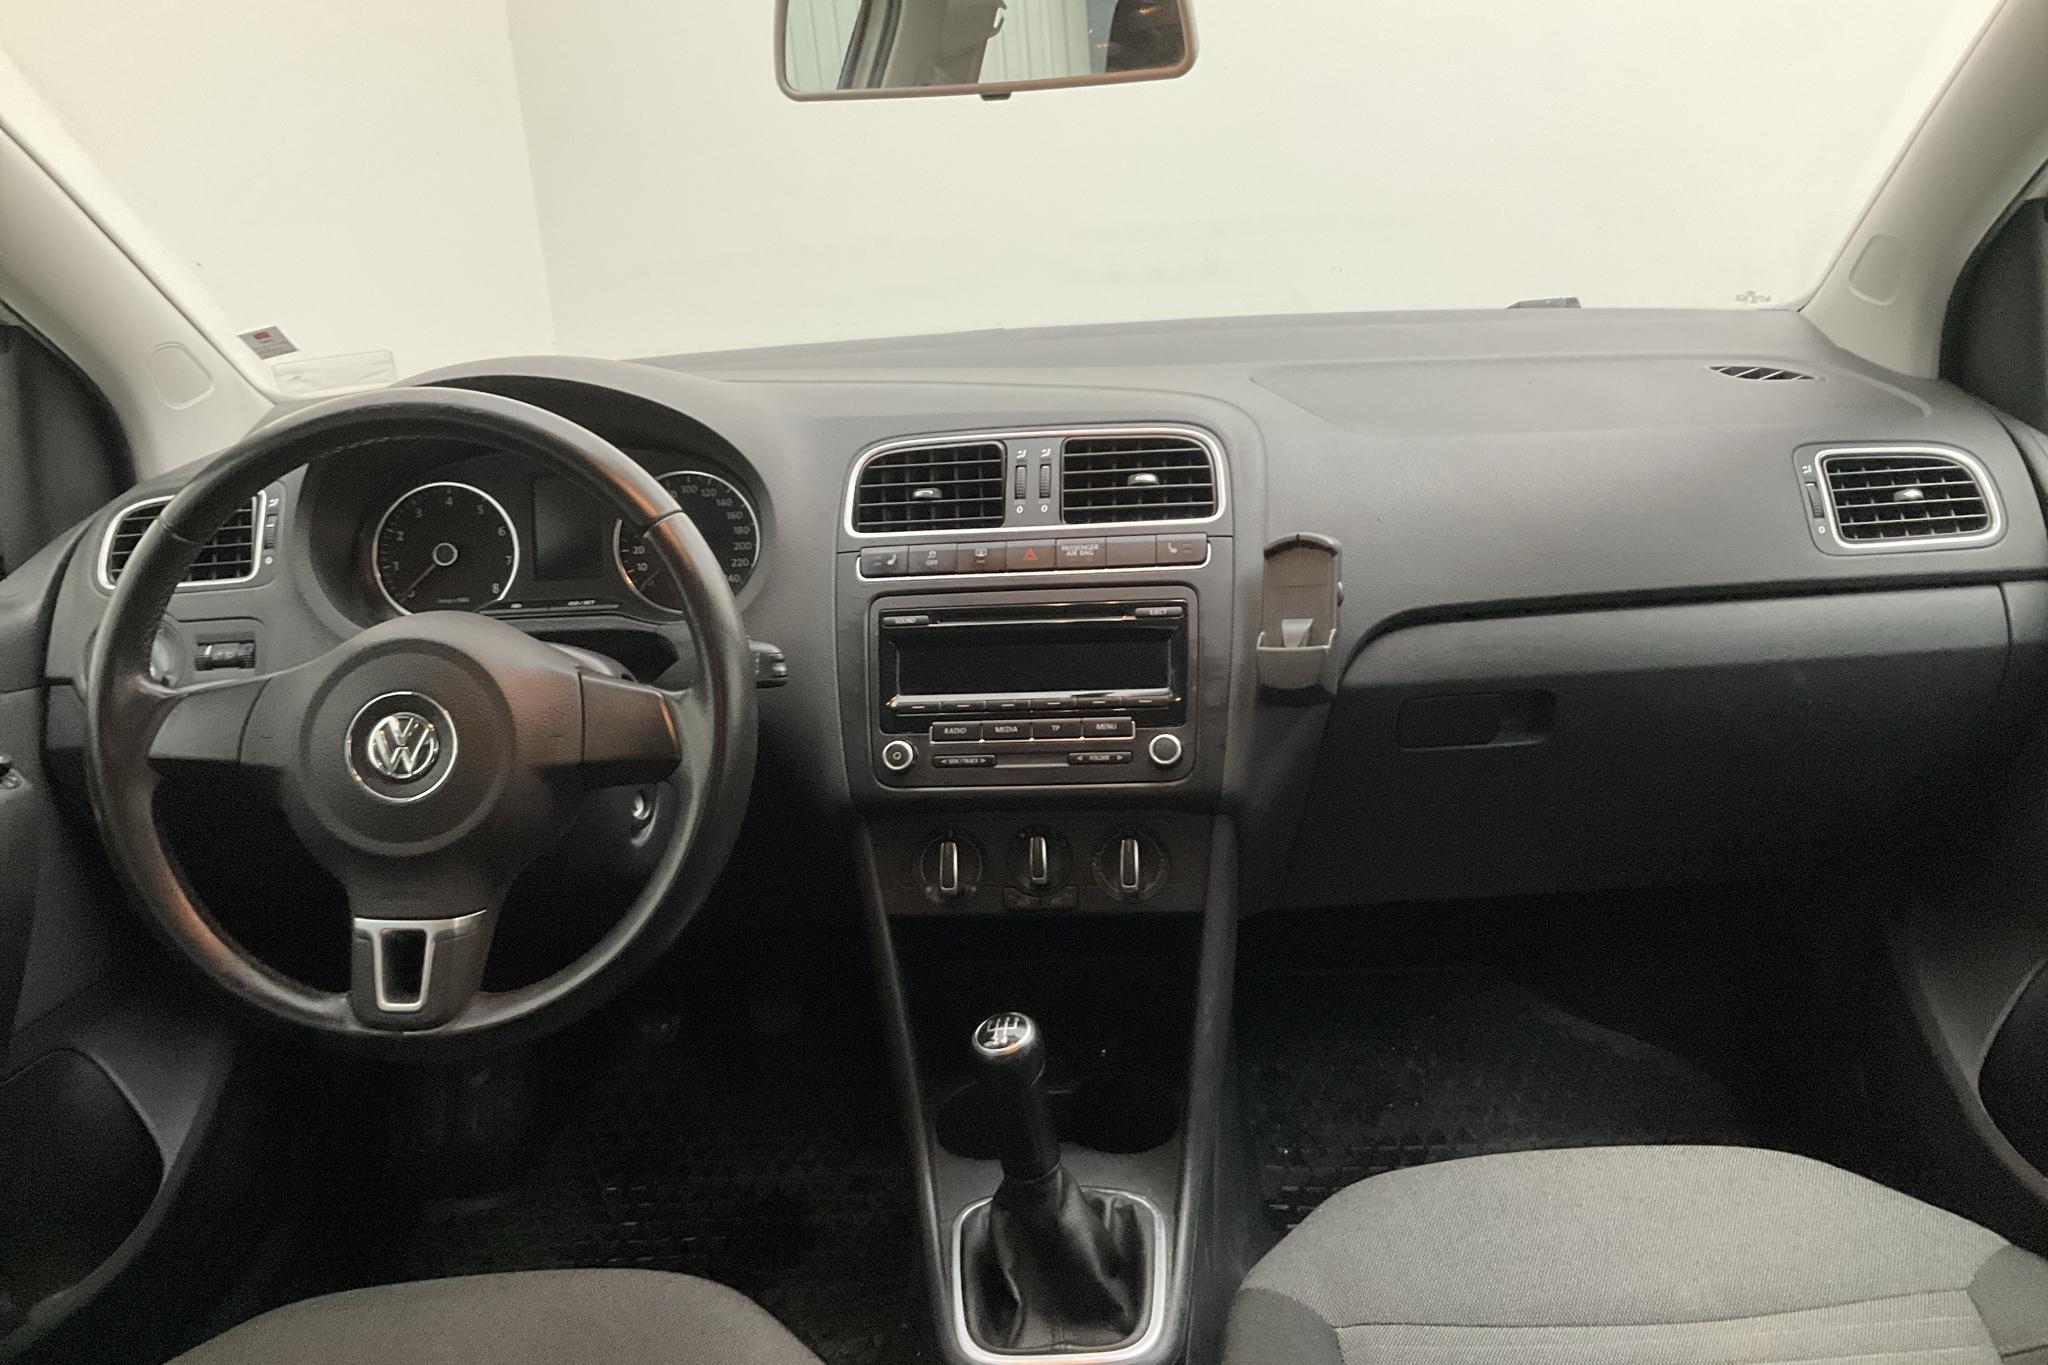 VW Polo 1.2 TSI 5dr (90hk) - 10 846 mil - Manuell - vit - 2013